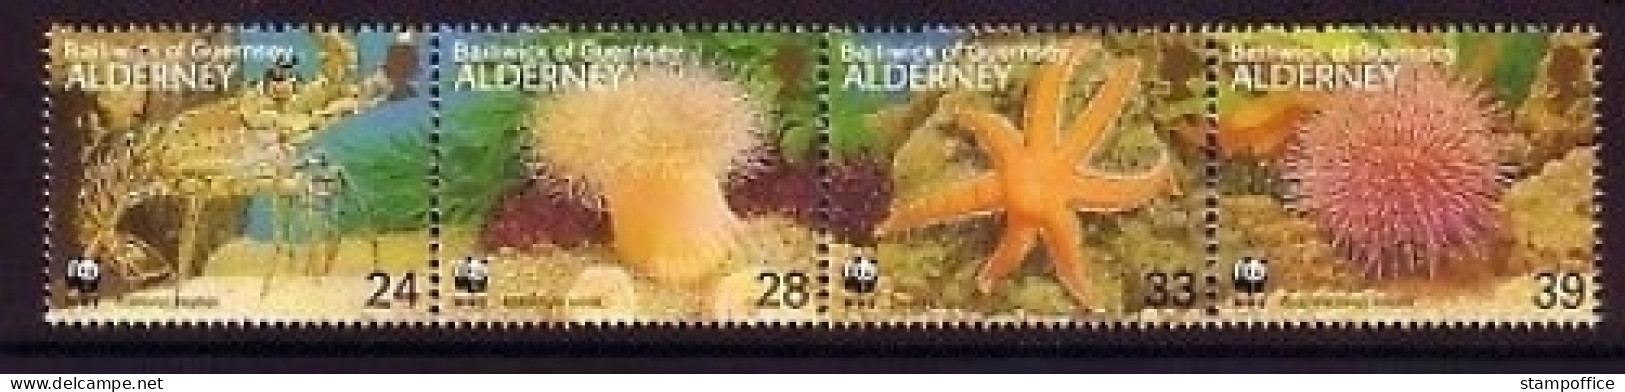 ALDERNEY MI-NR. 61-64 POSTFRISCH(MINT) NATURSCHUTZ WWF LANGUSTE SEENELKE SEESTERN SEEIGEL - Alderney